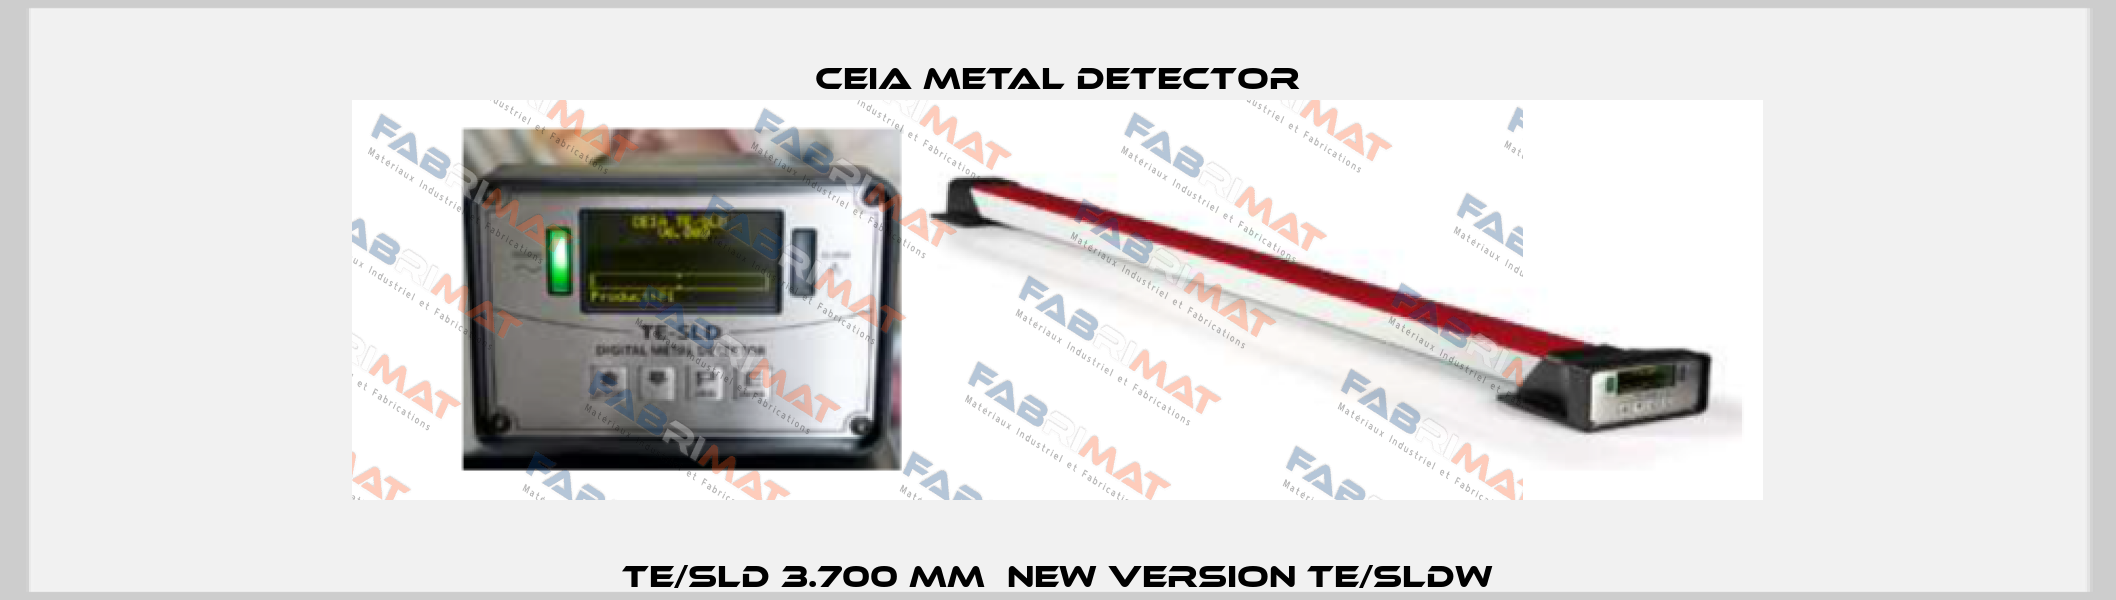 TE/SLD 3.700 mm  new version TE/SLDW CEIA METAL DETECTOR